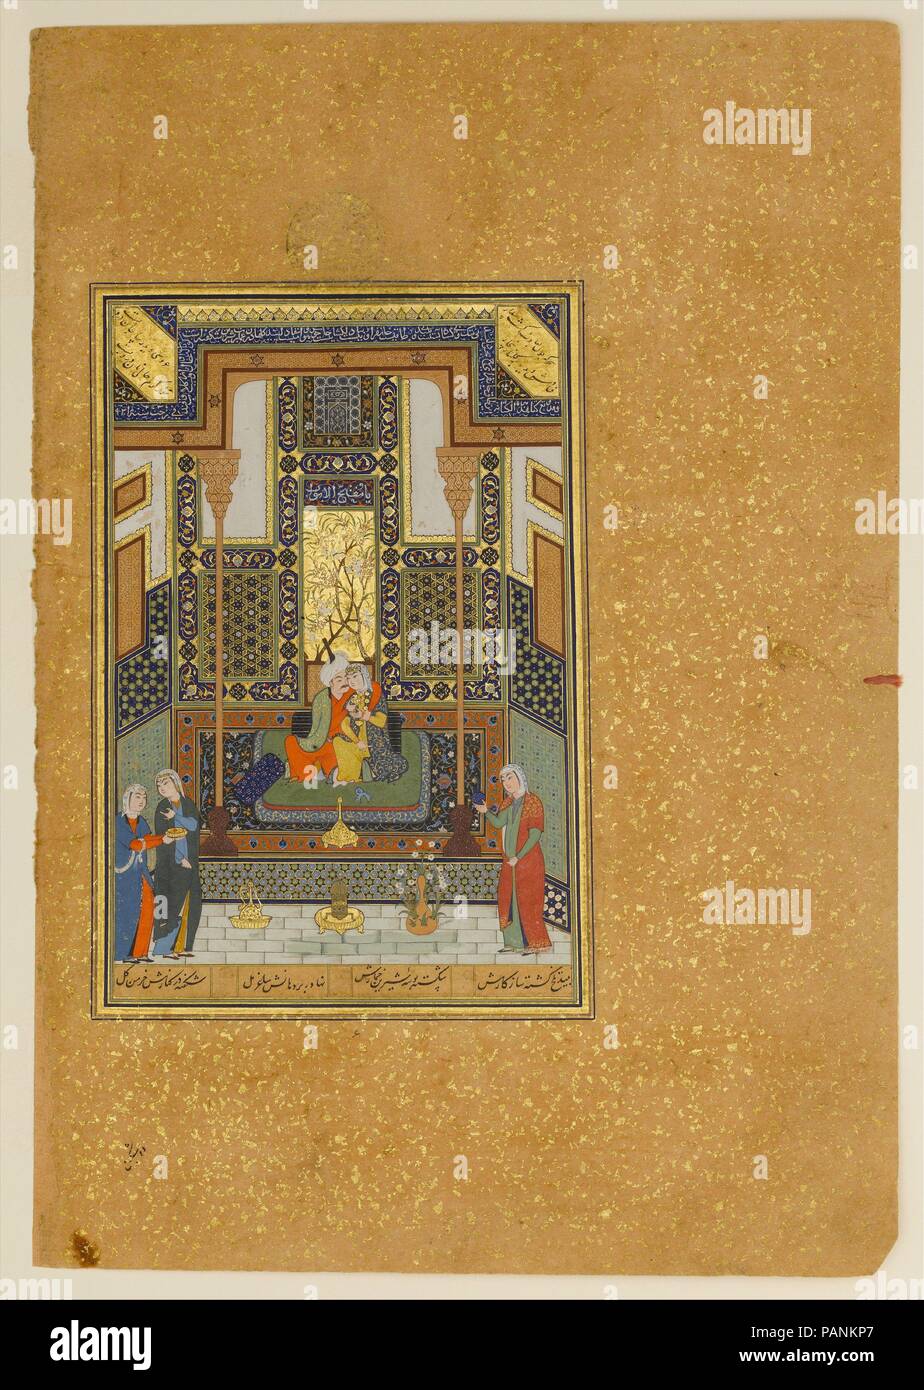 'Marriage of Khusrau and Shirin', Folio 104 from a Khamsa (Quintet) of Nizami. Artist: Painting by Shaikh Zada. Author: Nizami (Ilyas Abu Muhammad Nizam al-Din of Ganja) (probably 1141-1217). Calligrapher: Sultan Muhammad Nur (ca. 1472-ca. 1536); Mahmud Muzahhib. Dimensions: Painting: H. 7 in. (17.8 cm)   W. 4 3/4 in. (12.1 cm)  Page: H. 12 5/8 in. (32.1 cm)   W. 8 3/4 in. (22.2 cm)  Mat: H. 19 1/4 in. (48.9 cm)   W. 14 1/4 in. (36.2 cm). Date: dated  A.H. 931/A.D. 1524-25.  The second poem of Nizami's Khamsa (Quintet) is a romantic epic tale concerning the last great Sasanian ruler, Khusrau I Stock Photo